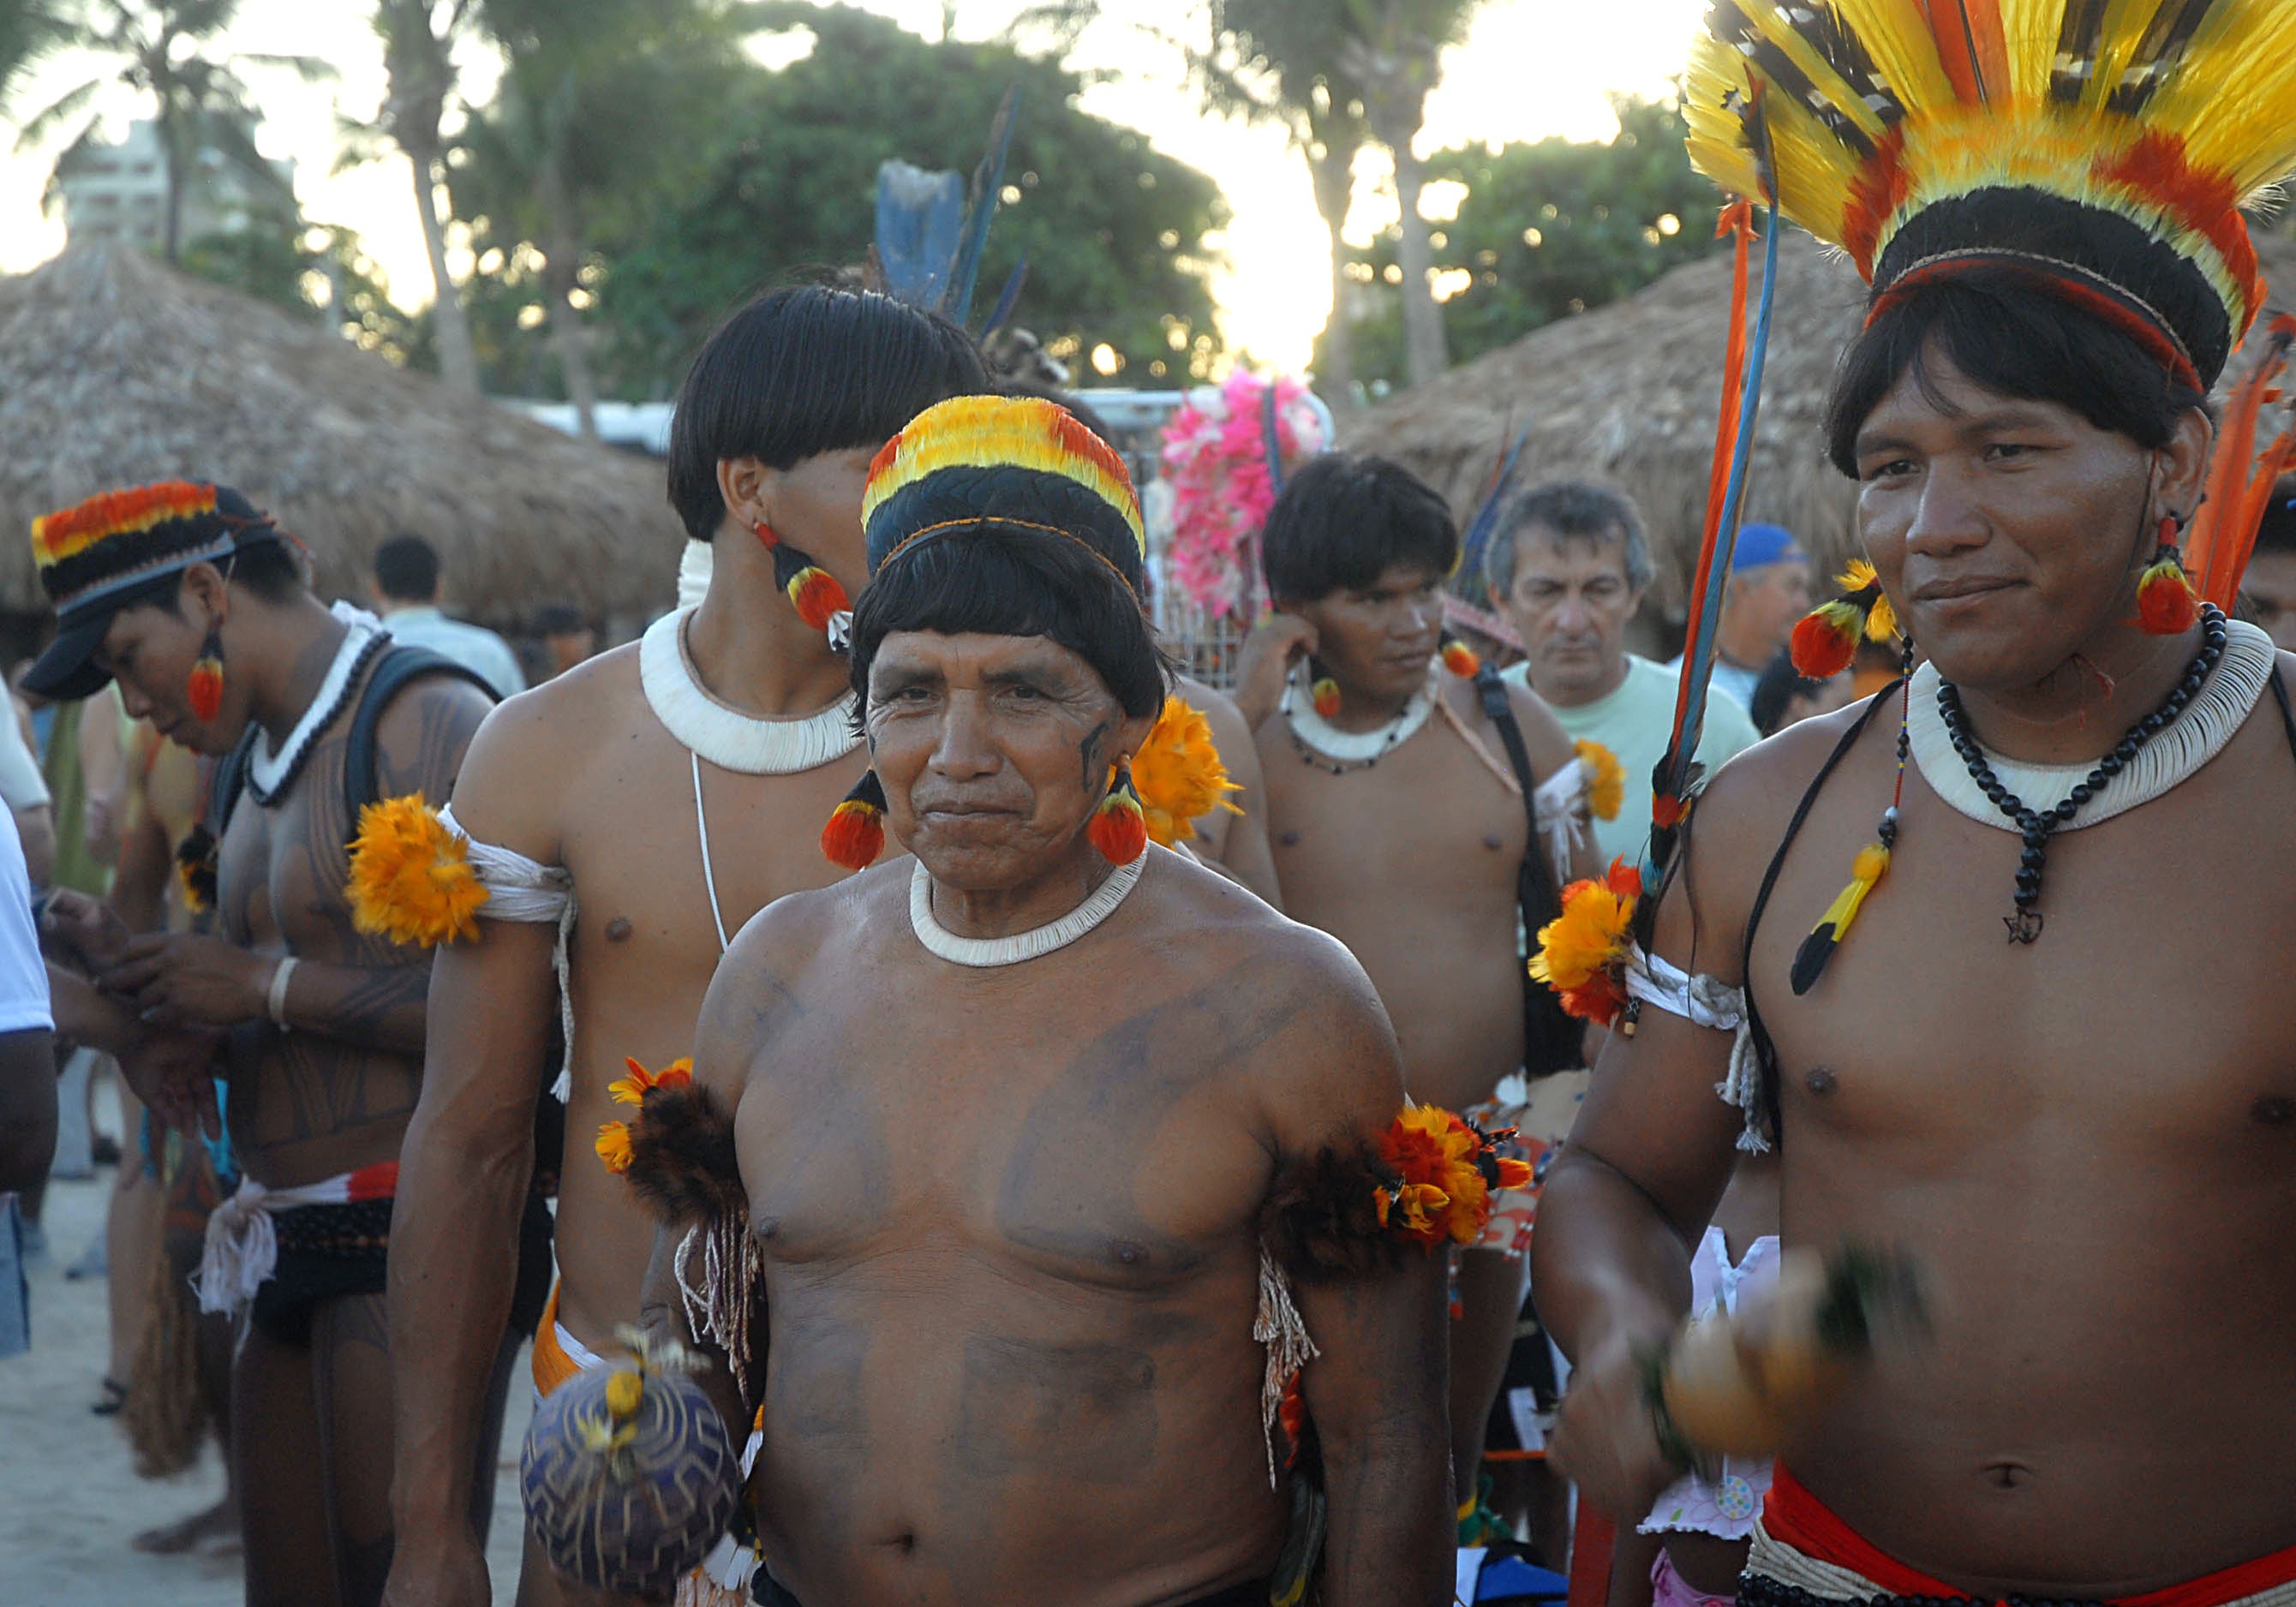 Os cuicuro, que vivem no Mato Grosso (Foto: Wikimedia Commons)